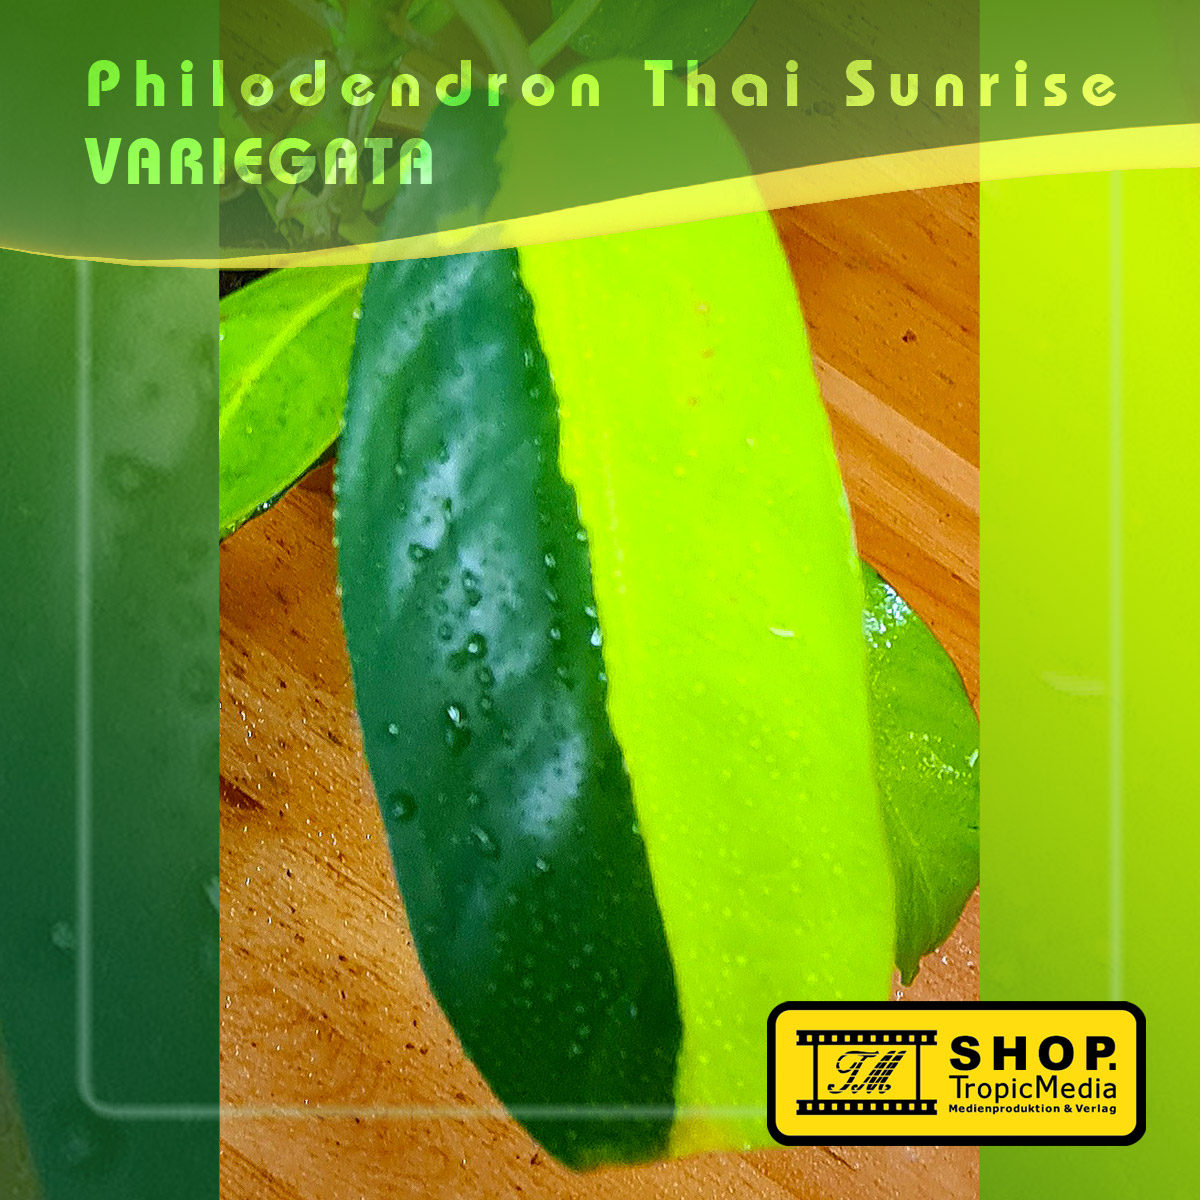 Philodendron Thai Sunrise 100% Variegata